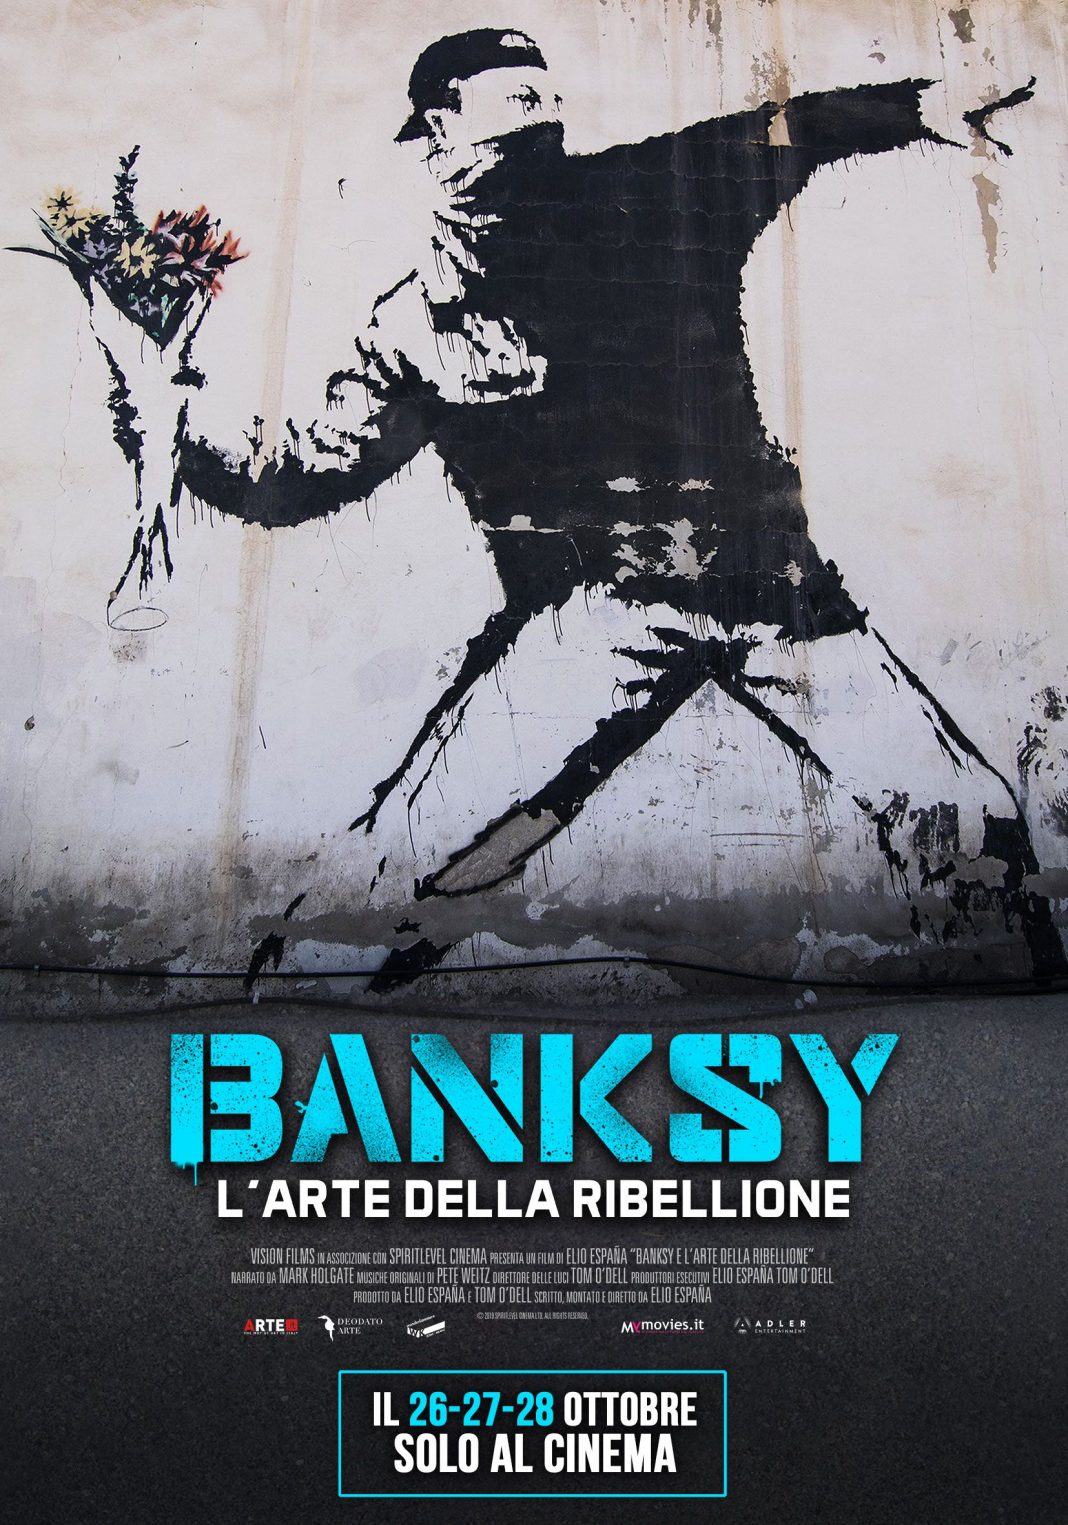 Banksy. L’arte della ribellionehttps://www.exibart.com/repository/media/2020/10/banksy_poster_ita2-1068x1525.jpg